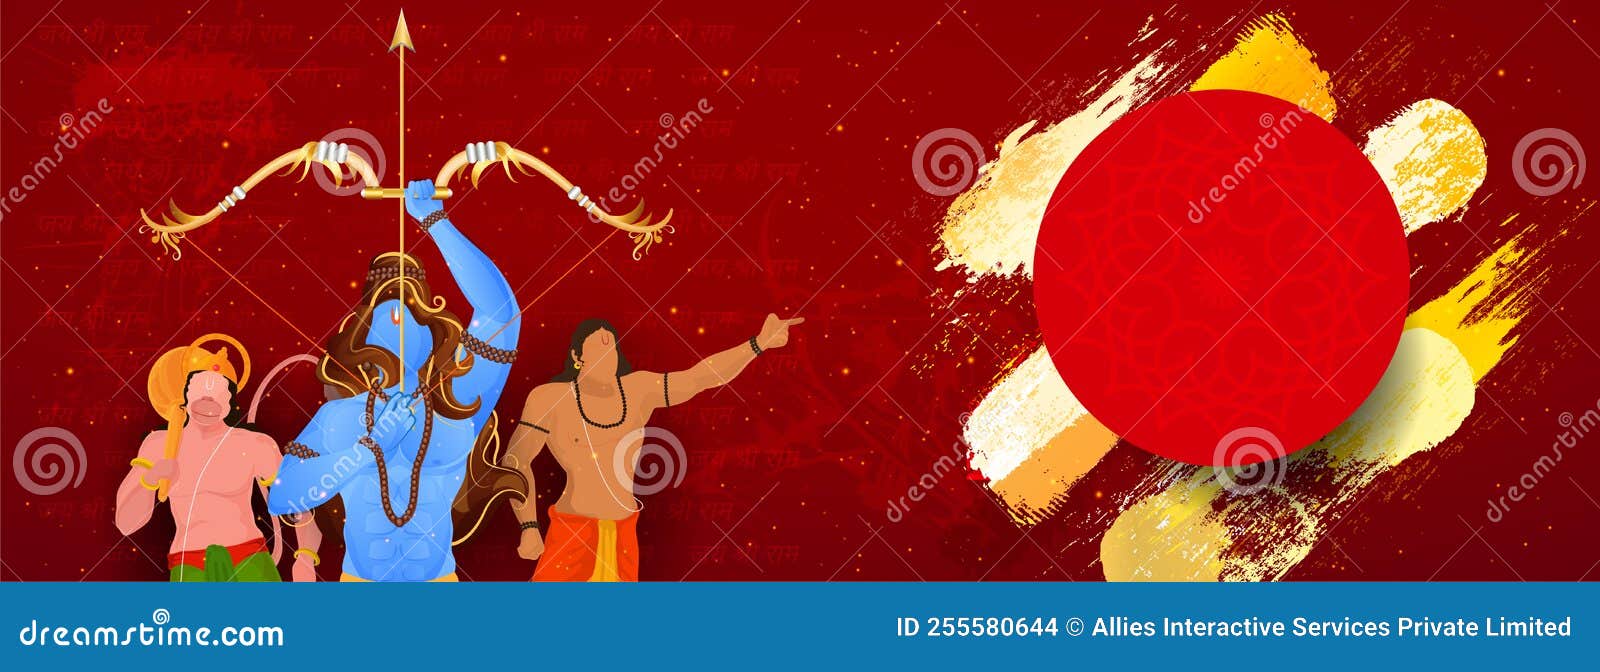 Hindu Mythology Lord Rama Taking an Aim with Lakshman, Hanuman ...